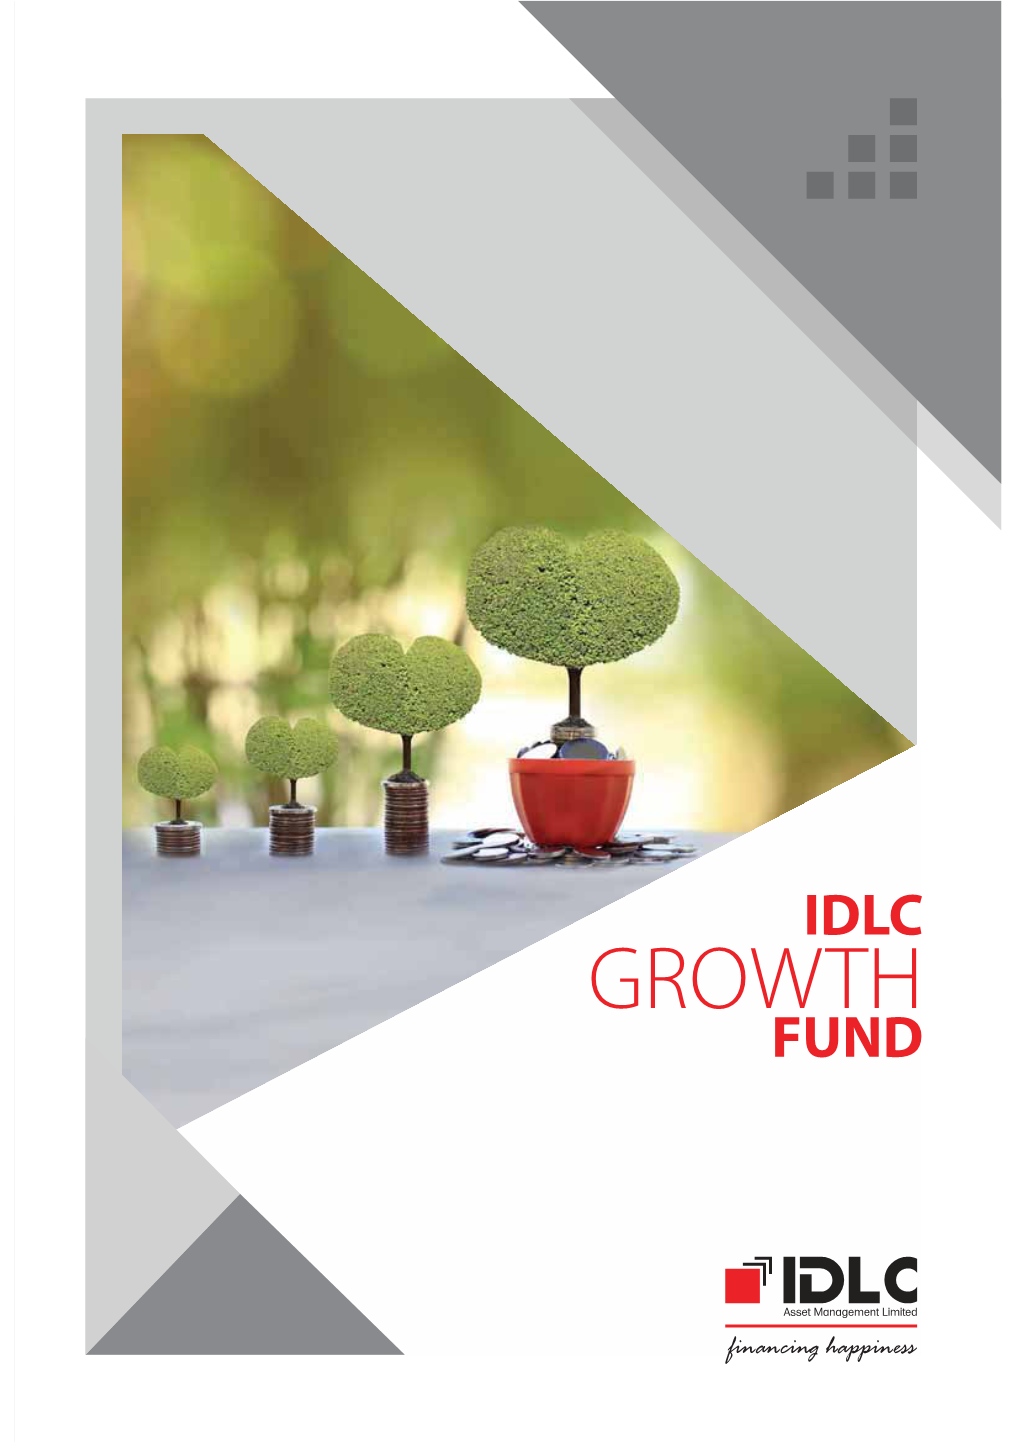 Idlc Growth Fund an Open-End Mutual Fund Scheme